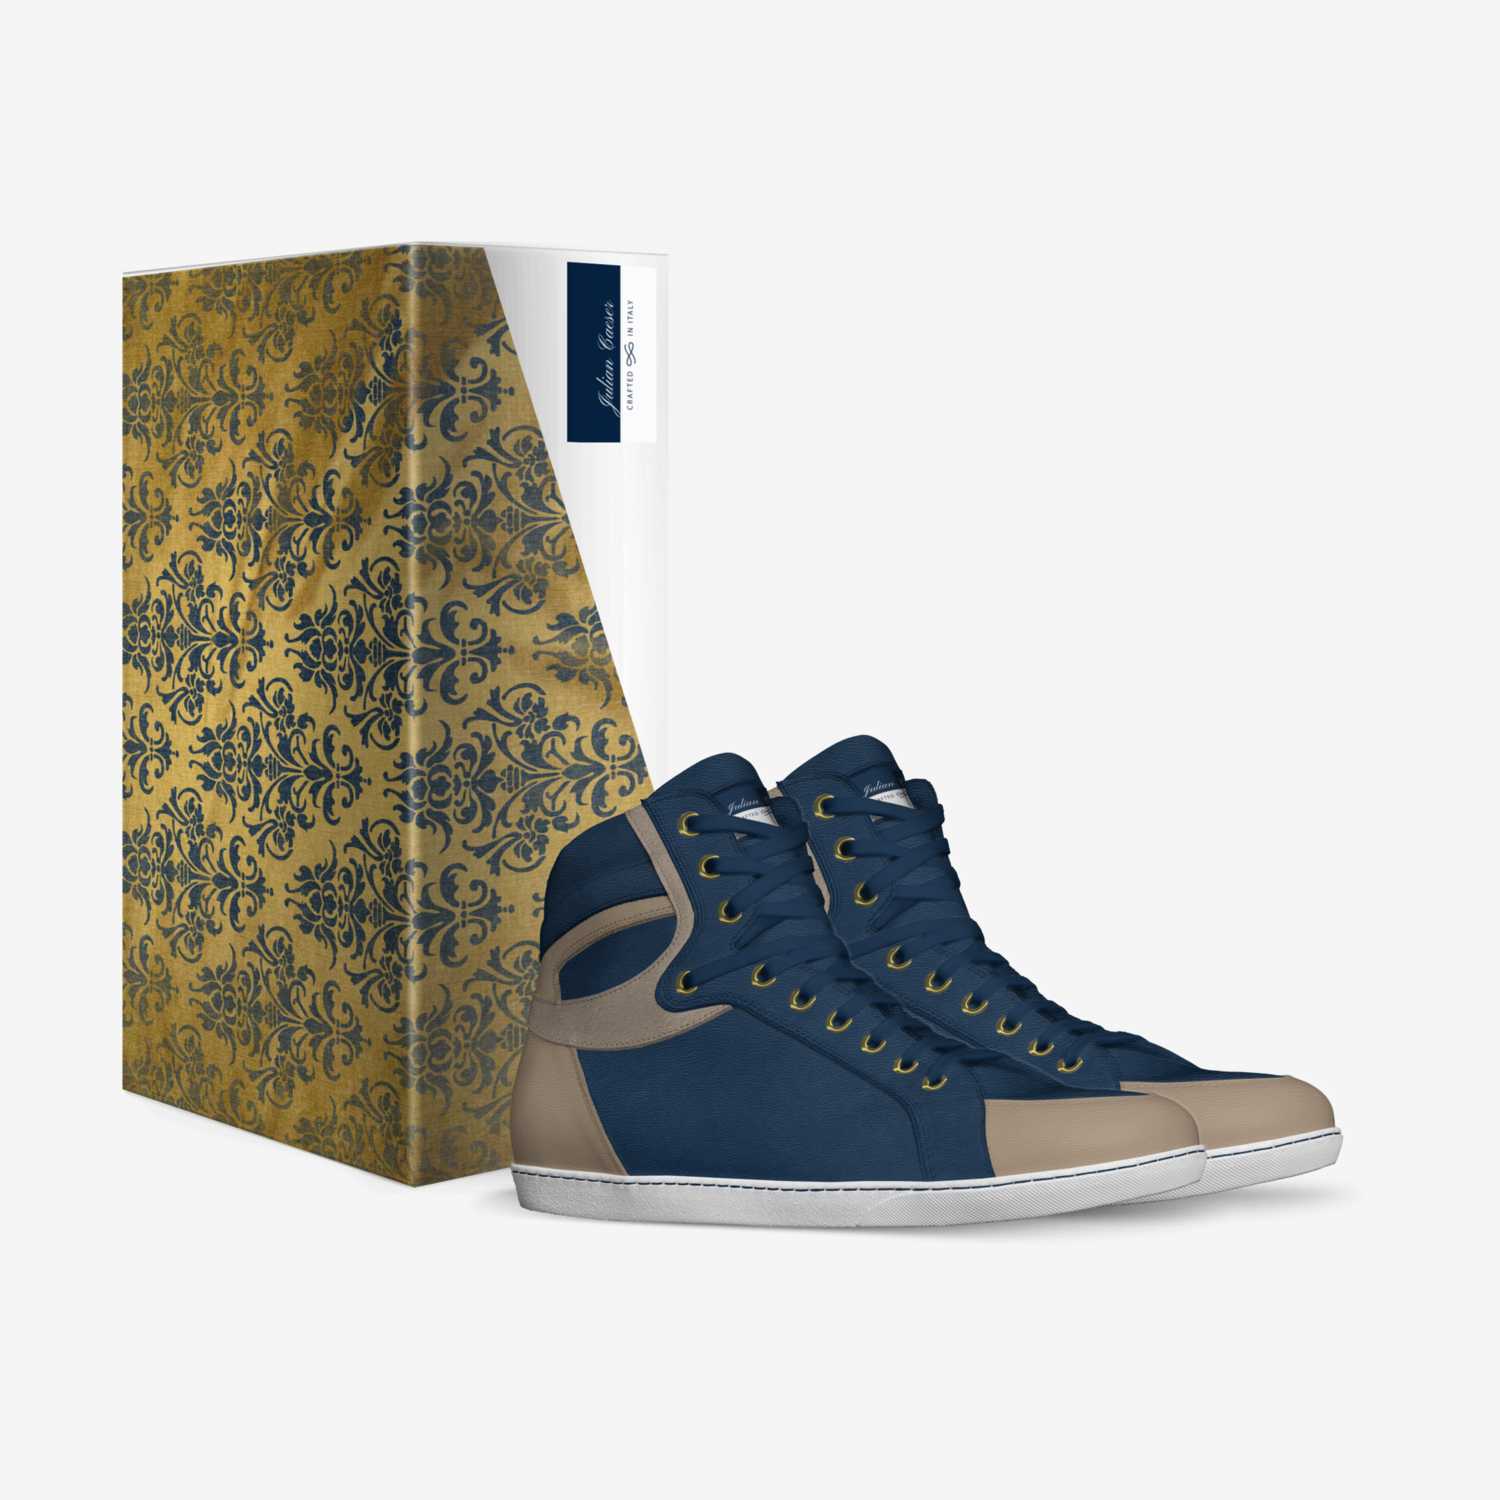 KiiNG custom made in Italy shoes by Julian Da Don | Box view